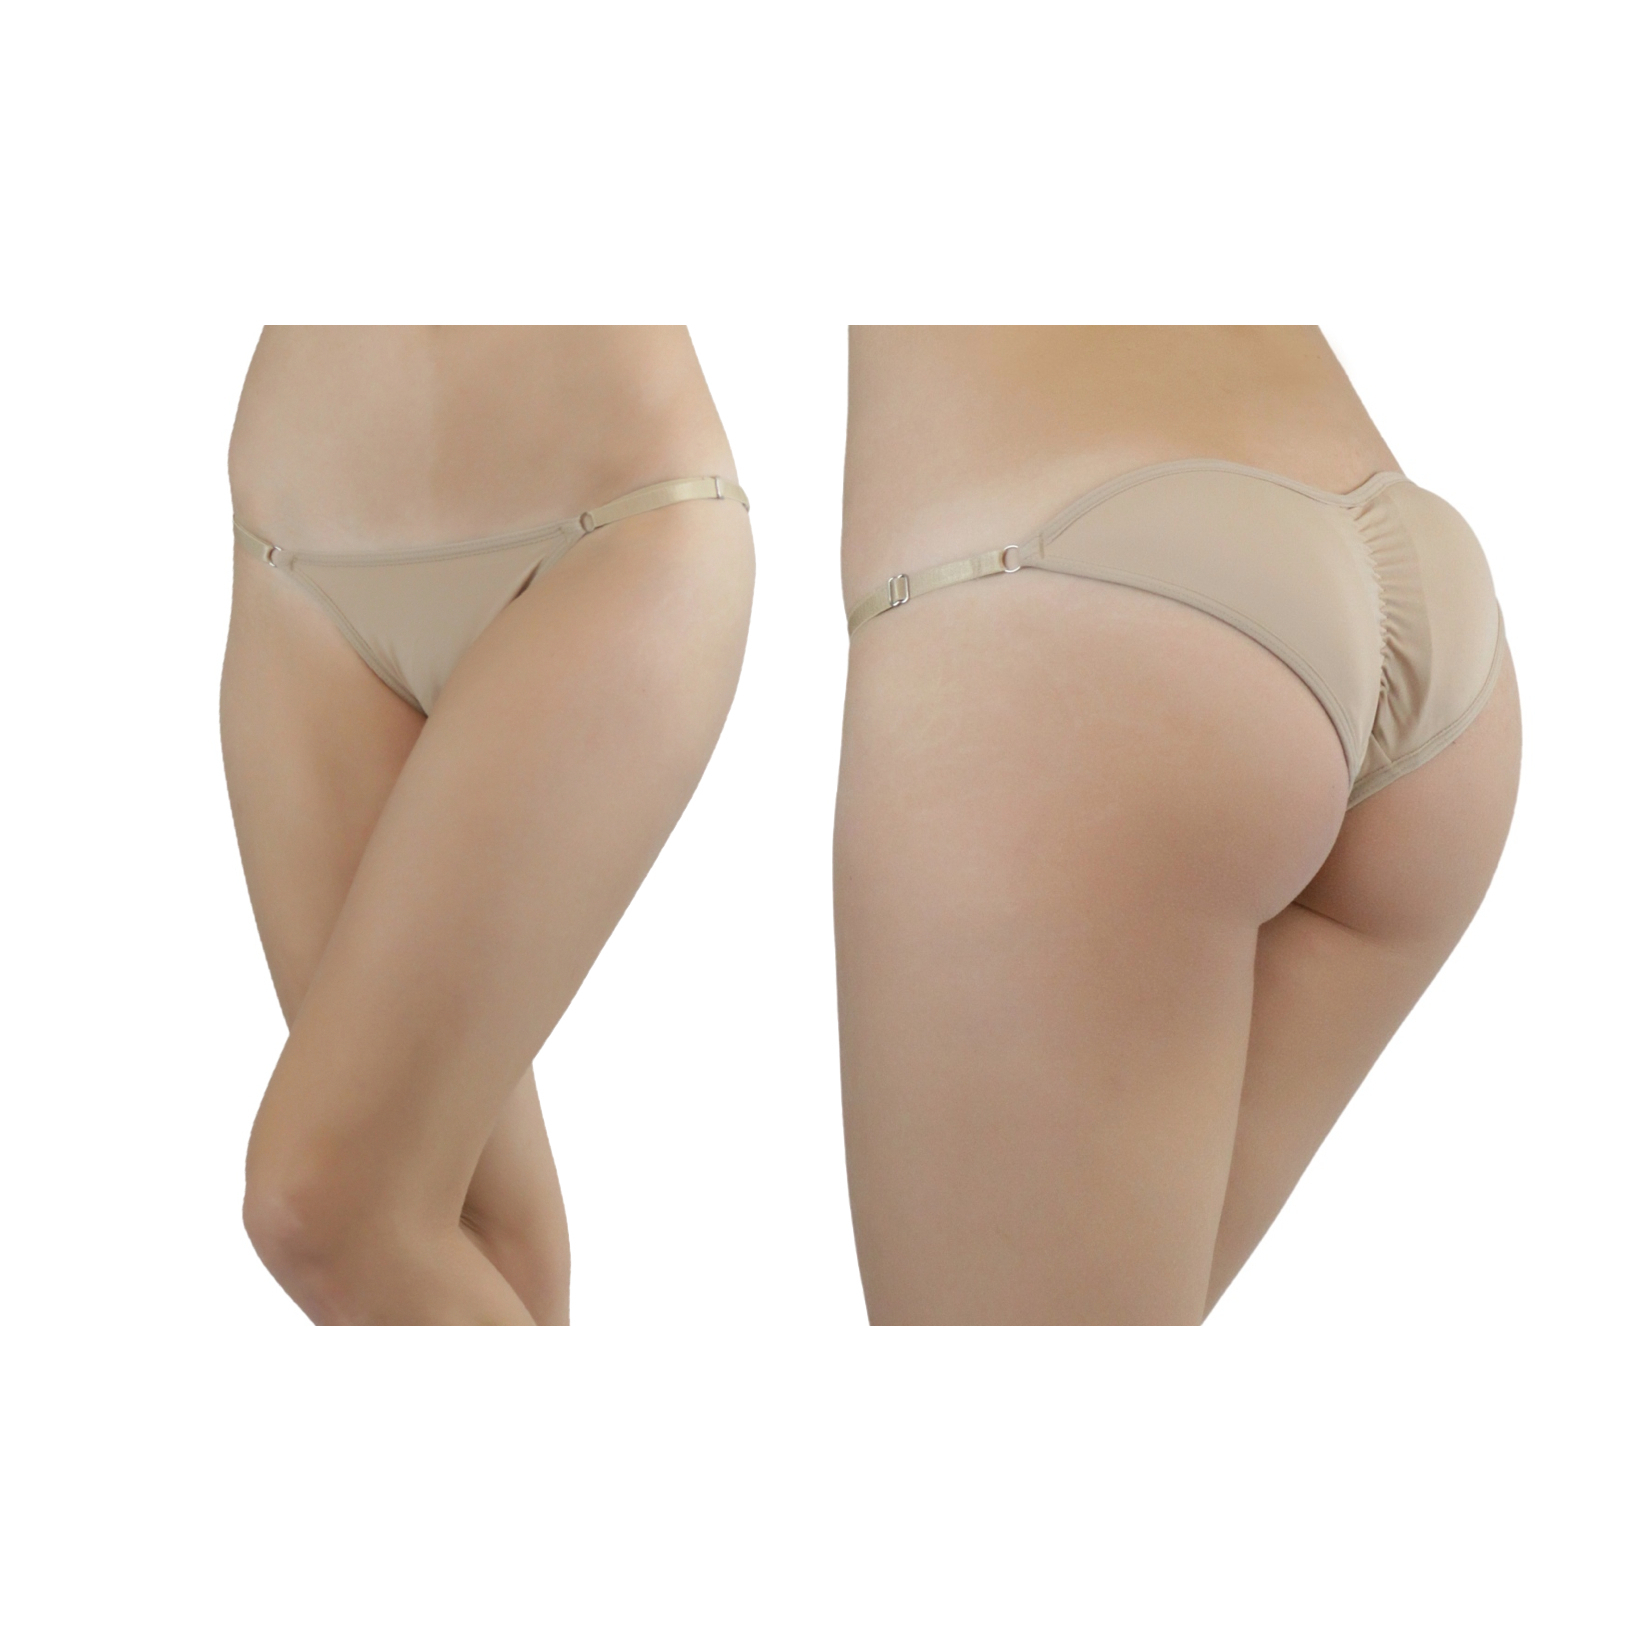 Women's Booty Booster Shapewear Tanga Panties - Beige, M